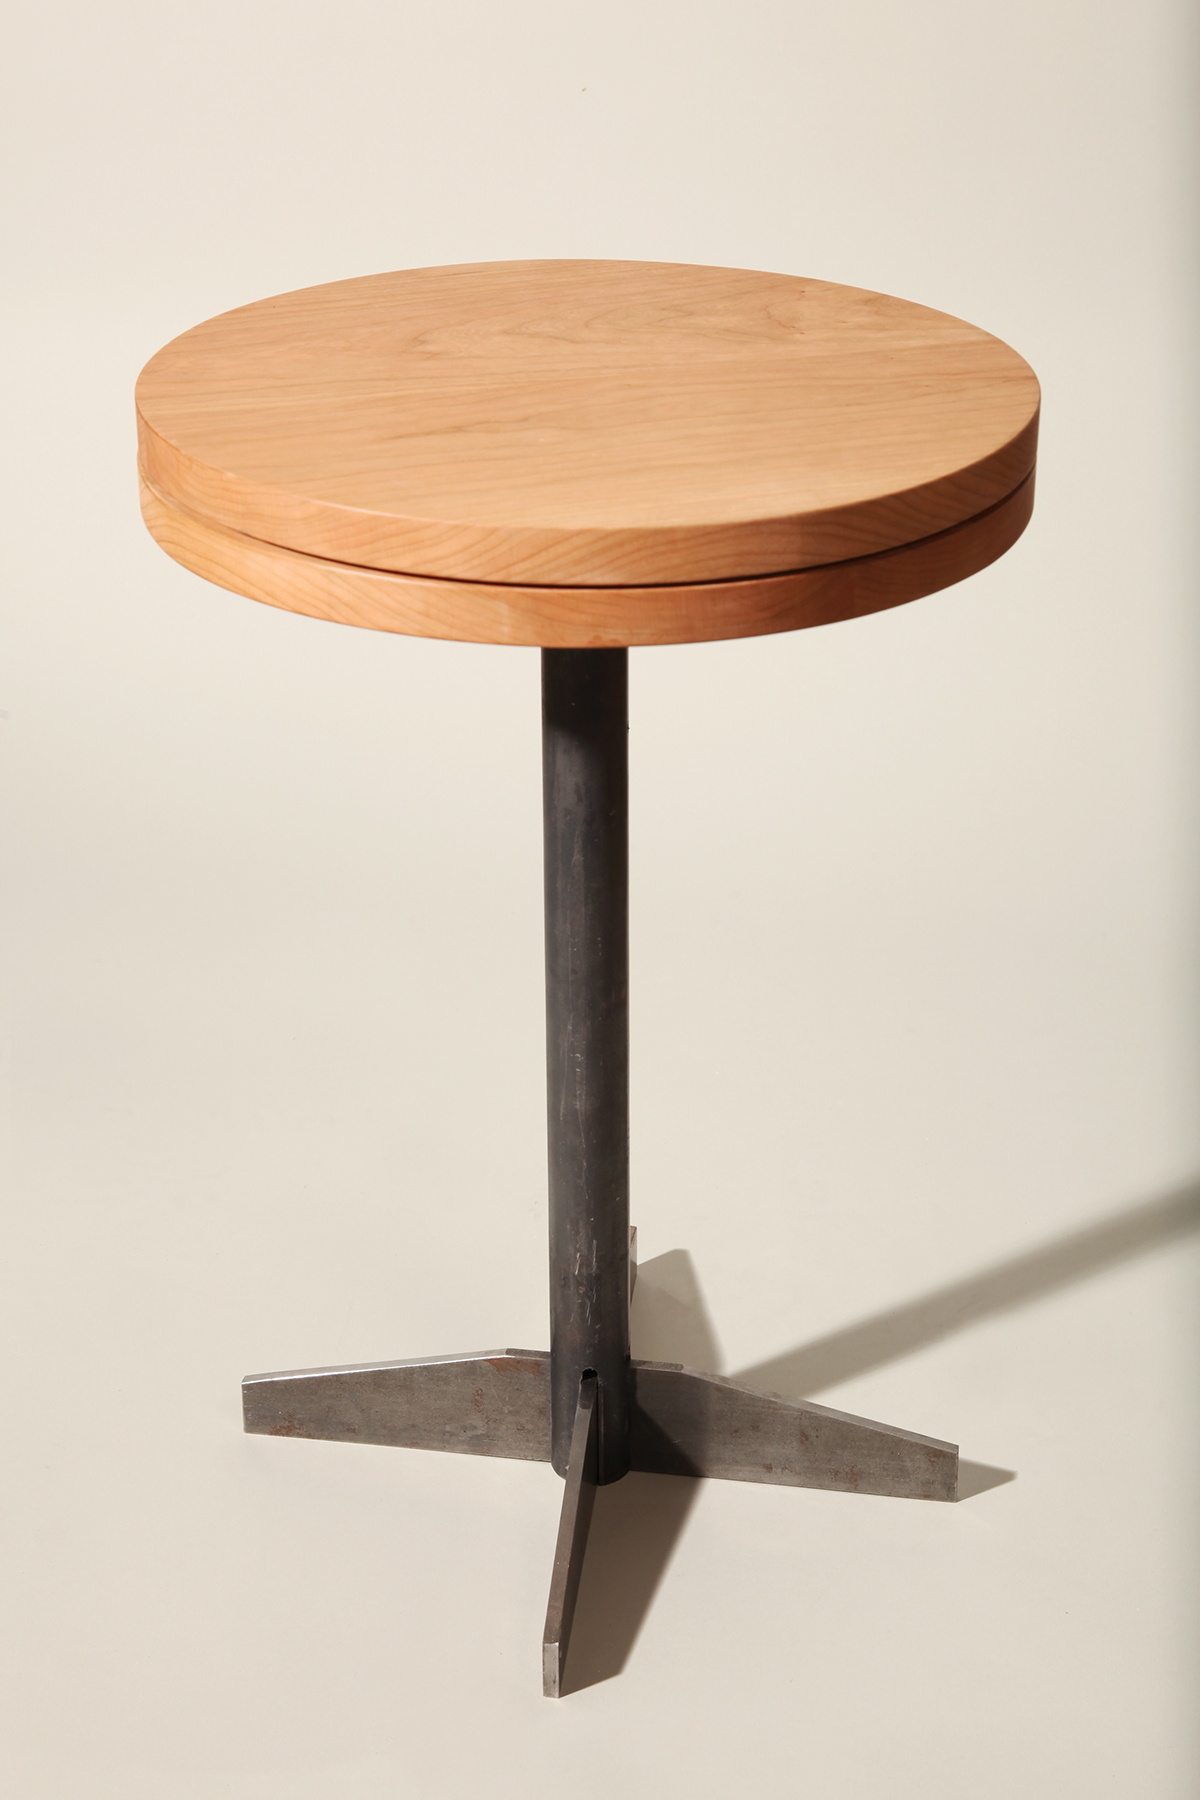 furniture side table wood steel swivel turntable lazy susan Machining risd ayako takase